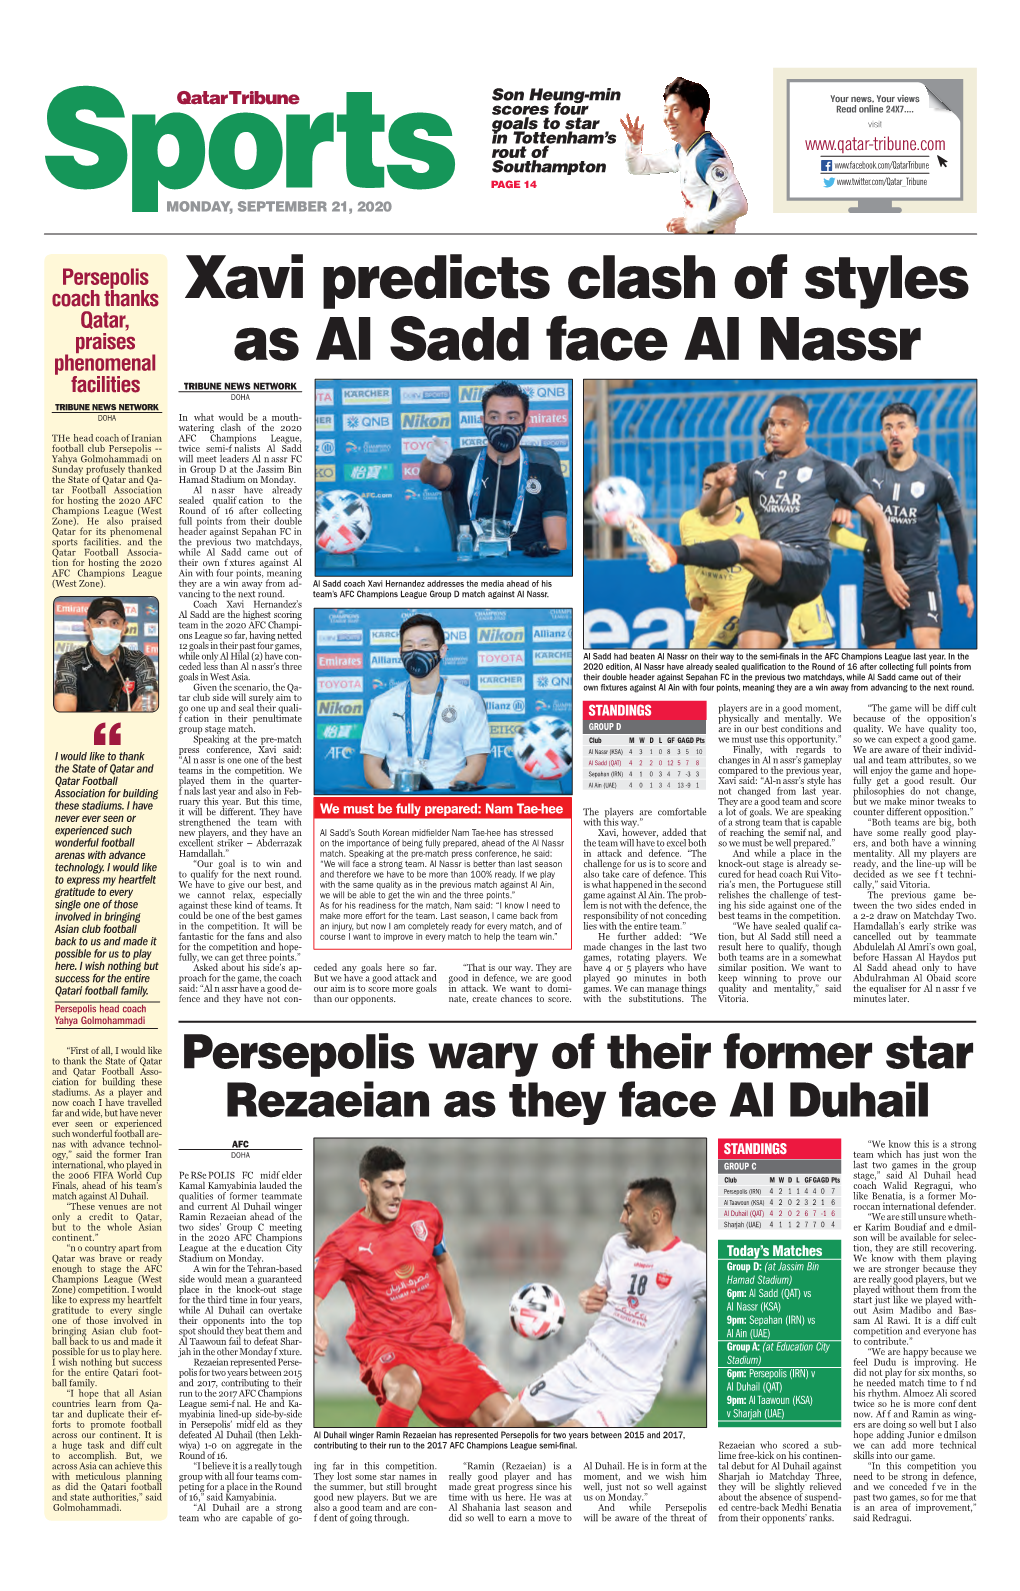 Xavi Predicts Clash of Styles As Al Sadd Face Al Nassr